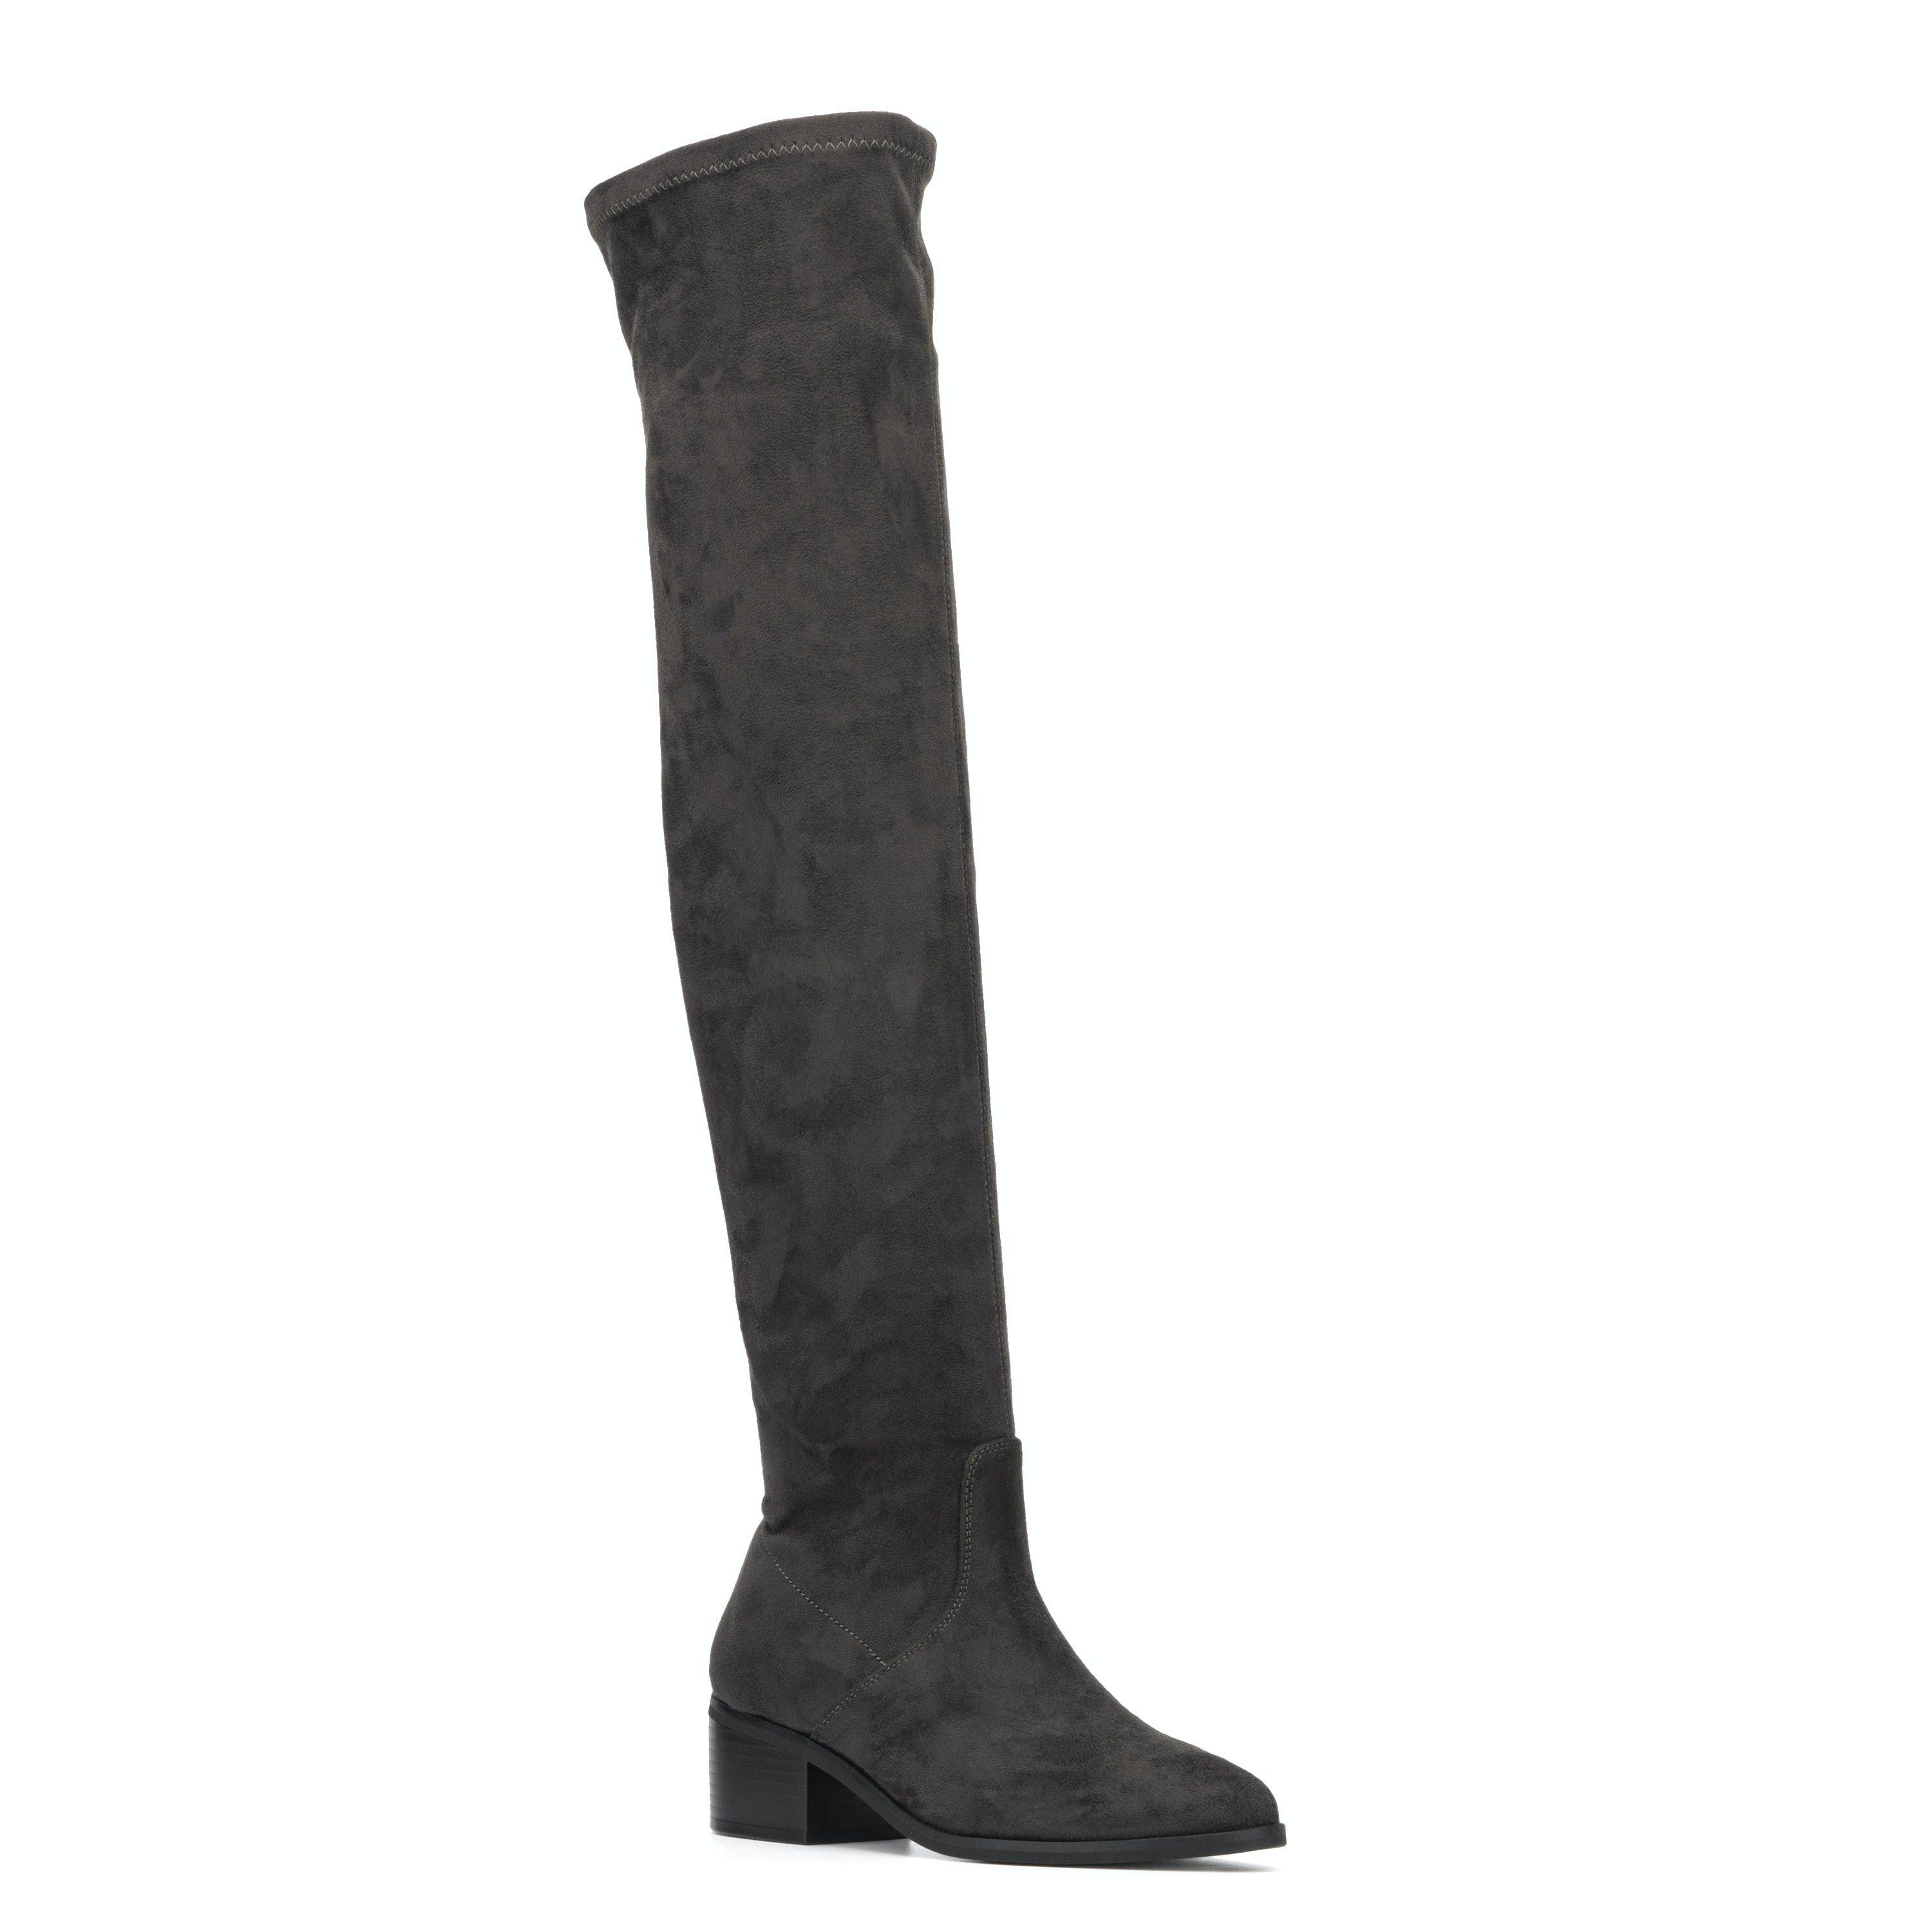 New York & Company Rana Tall Boot in Black | Lyst